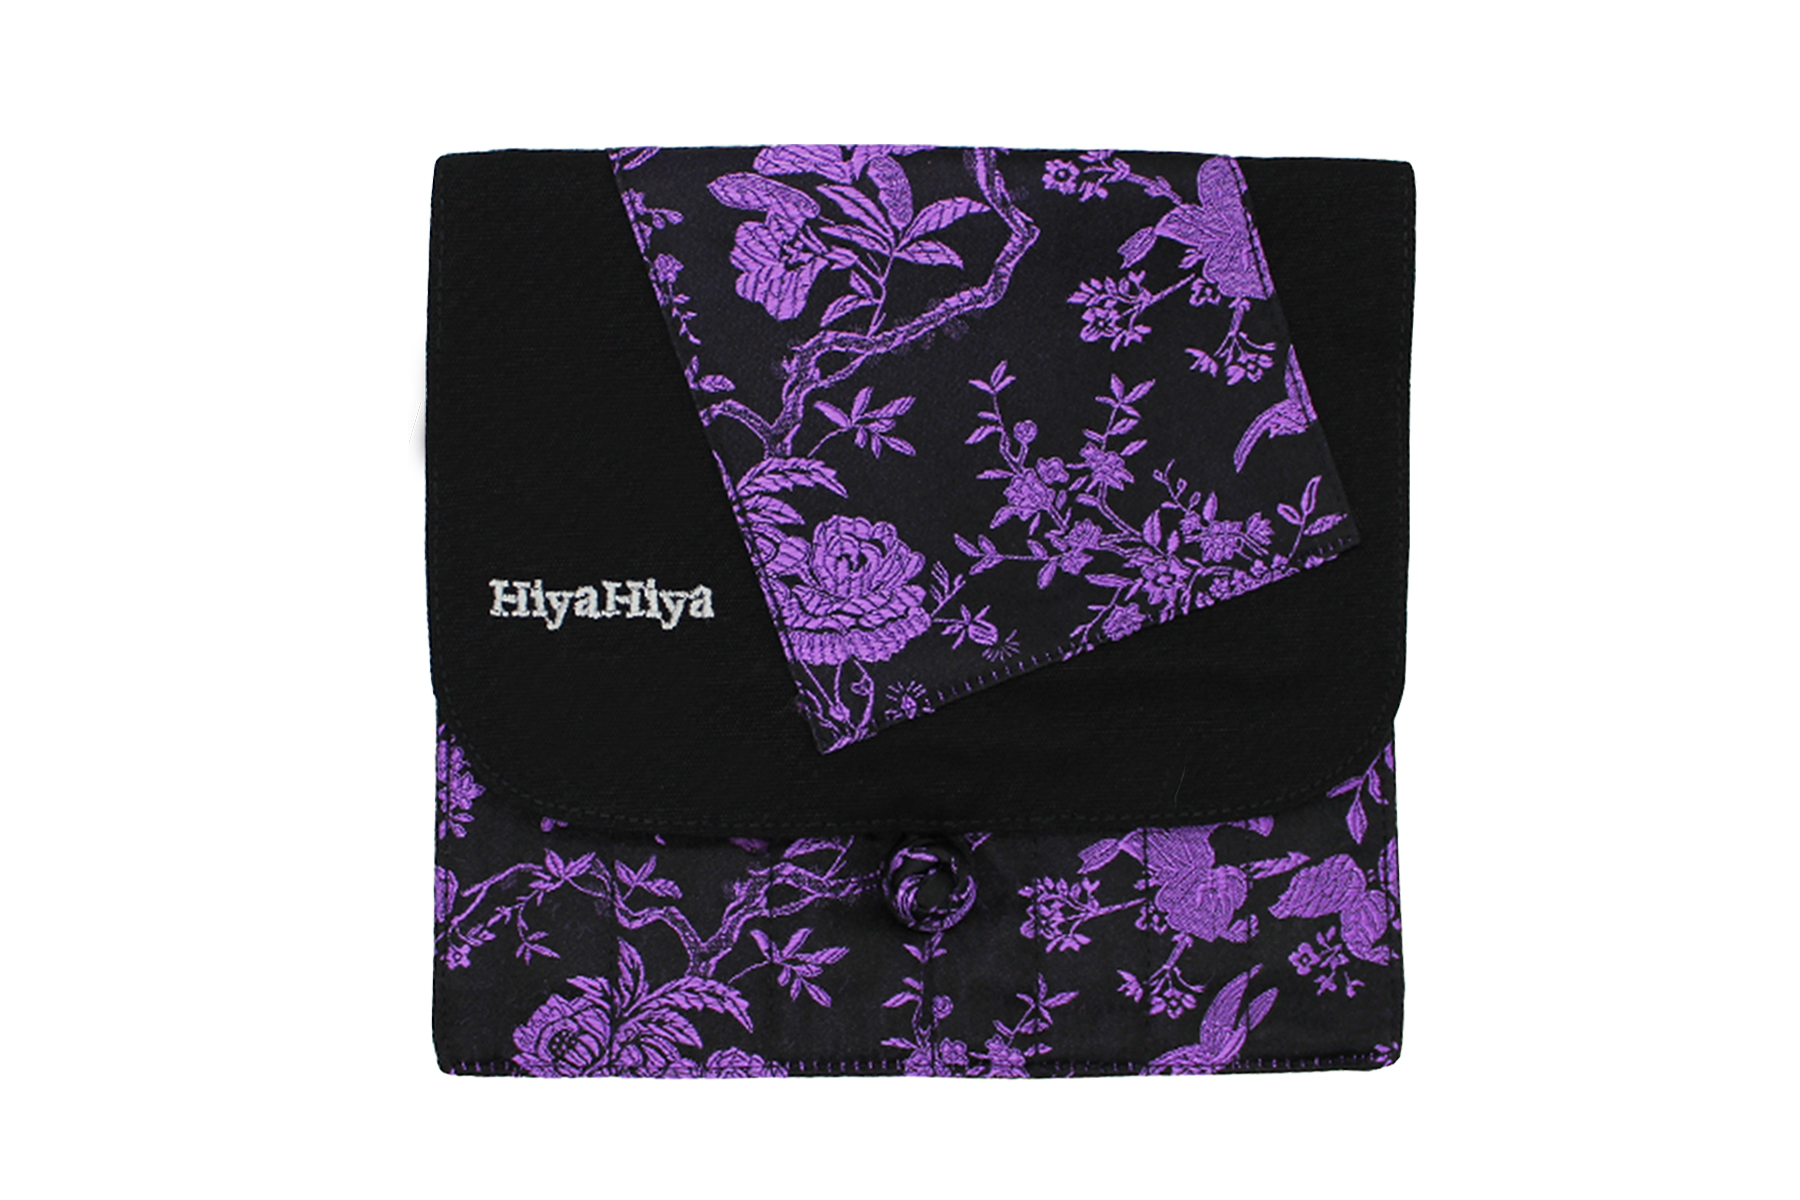 HiyaHiya Europe Interchangeable Case purple birds